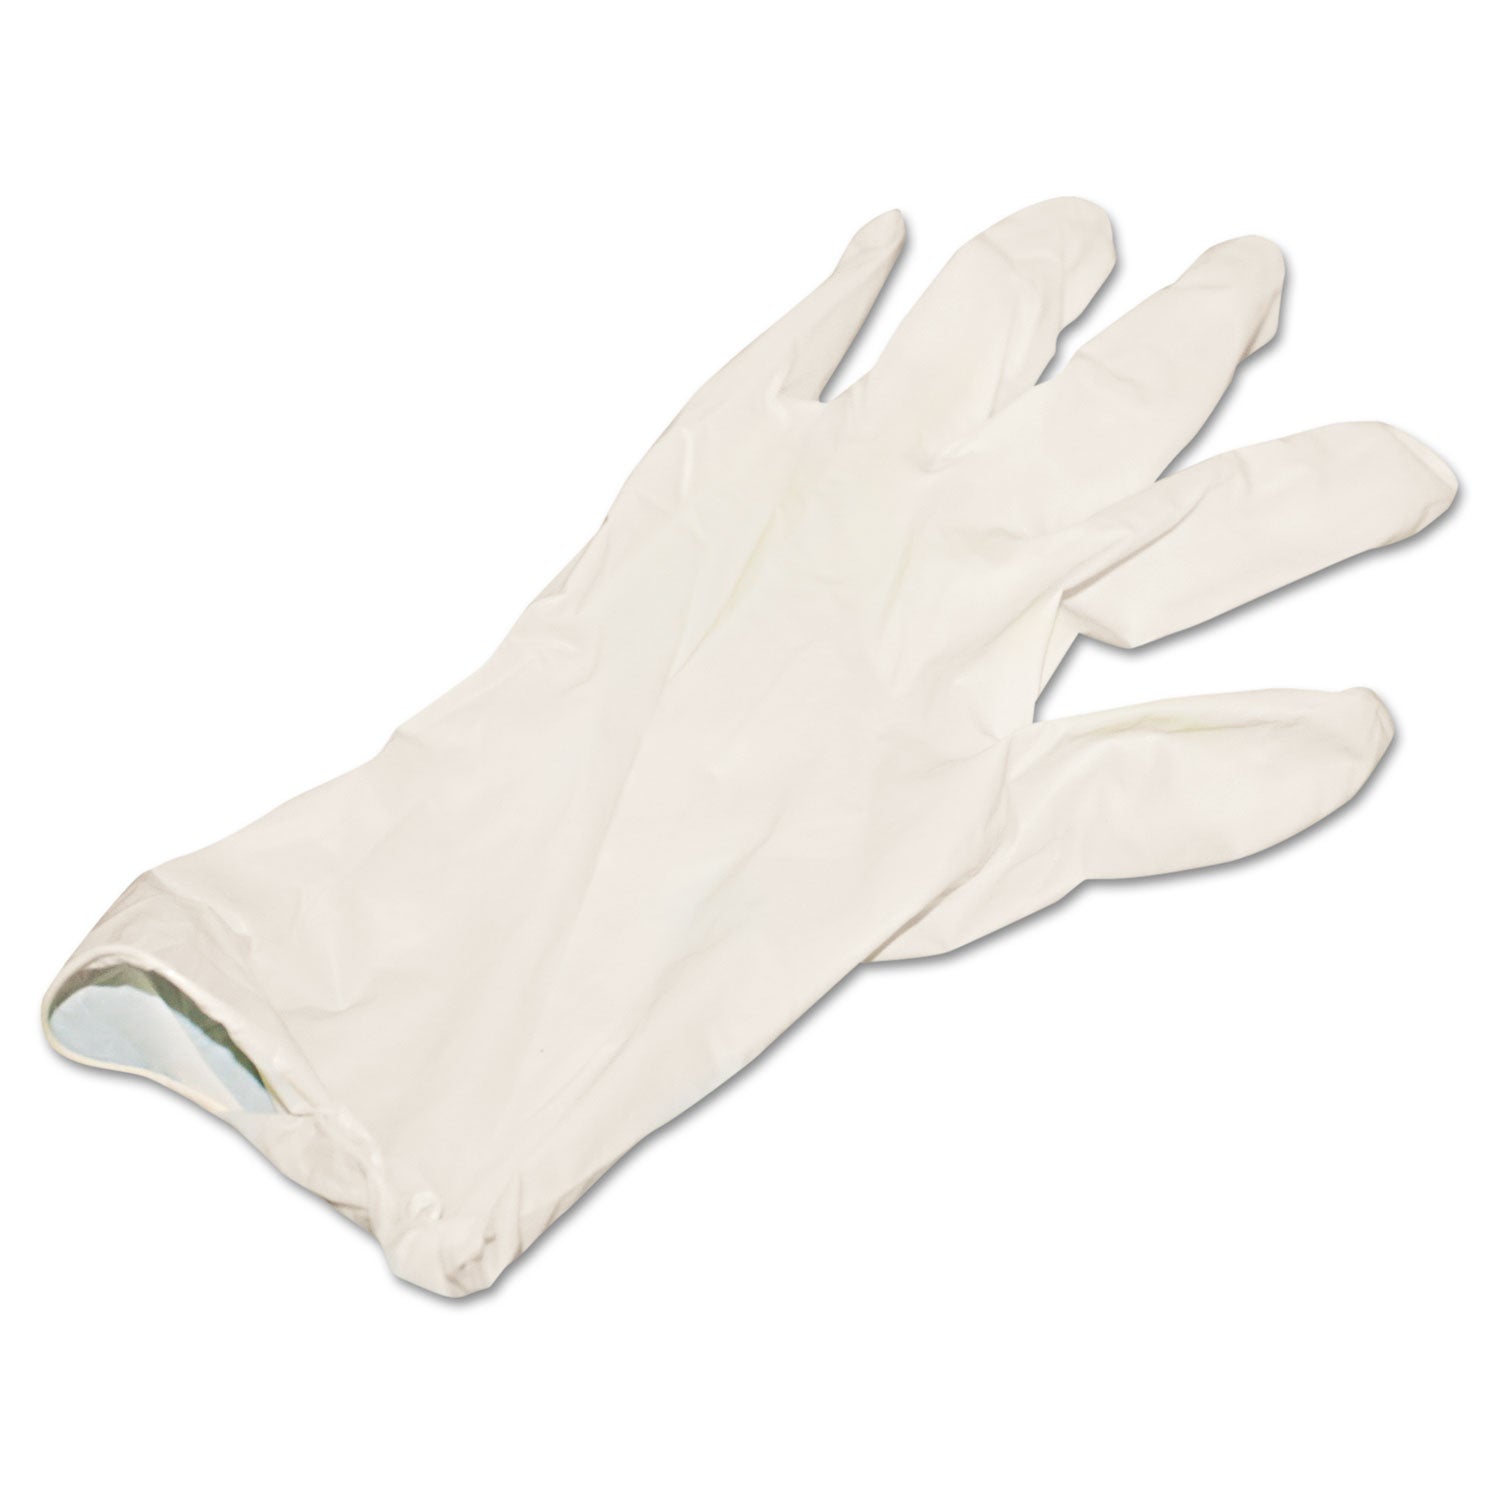 Powder-Free Synthetic Vinyl Gloves, Large, Beige, 4 mil, 100/Box - 